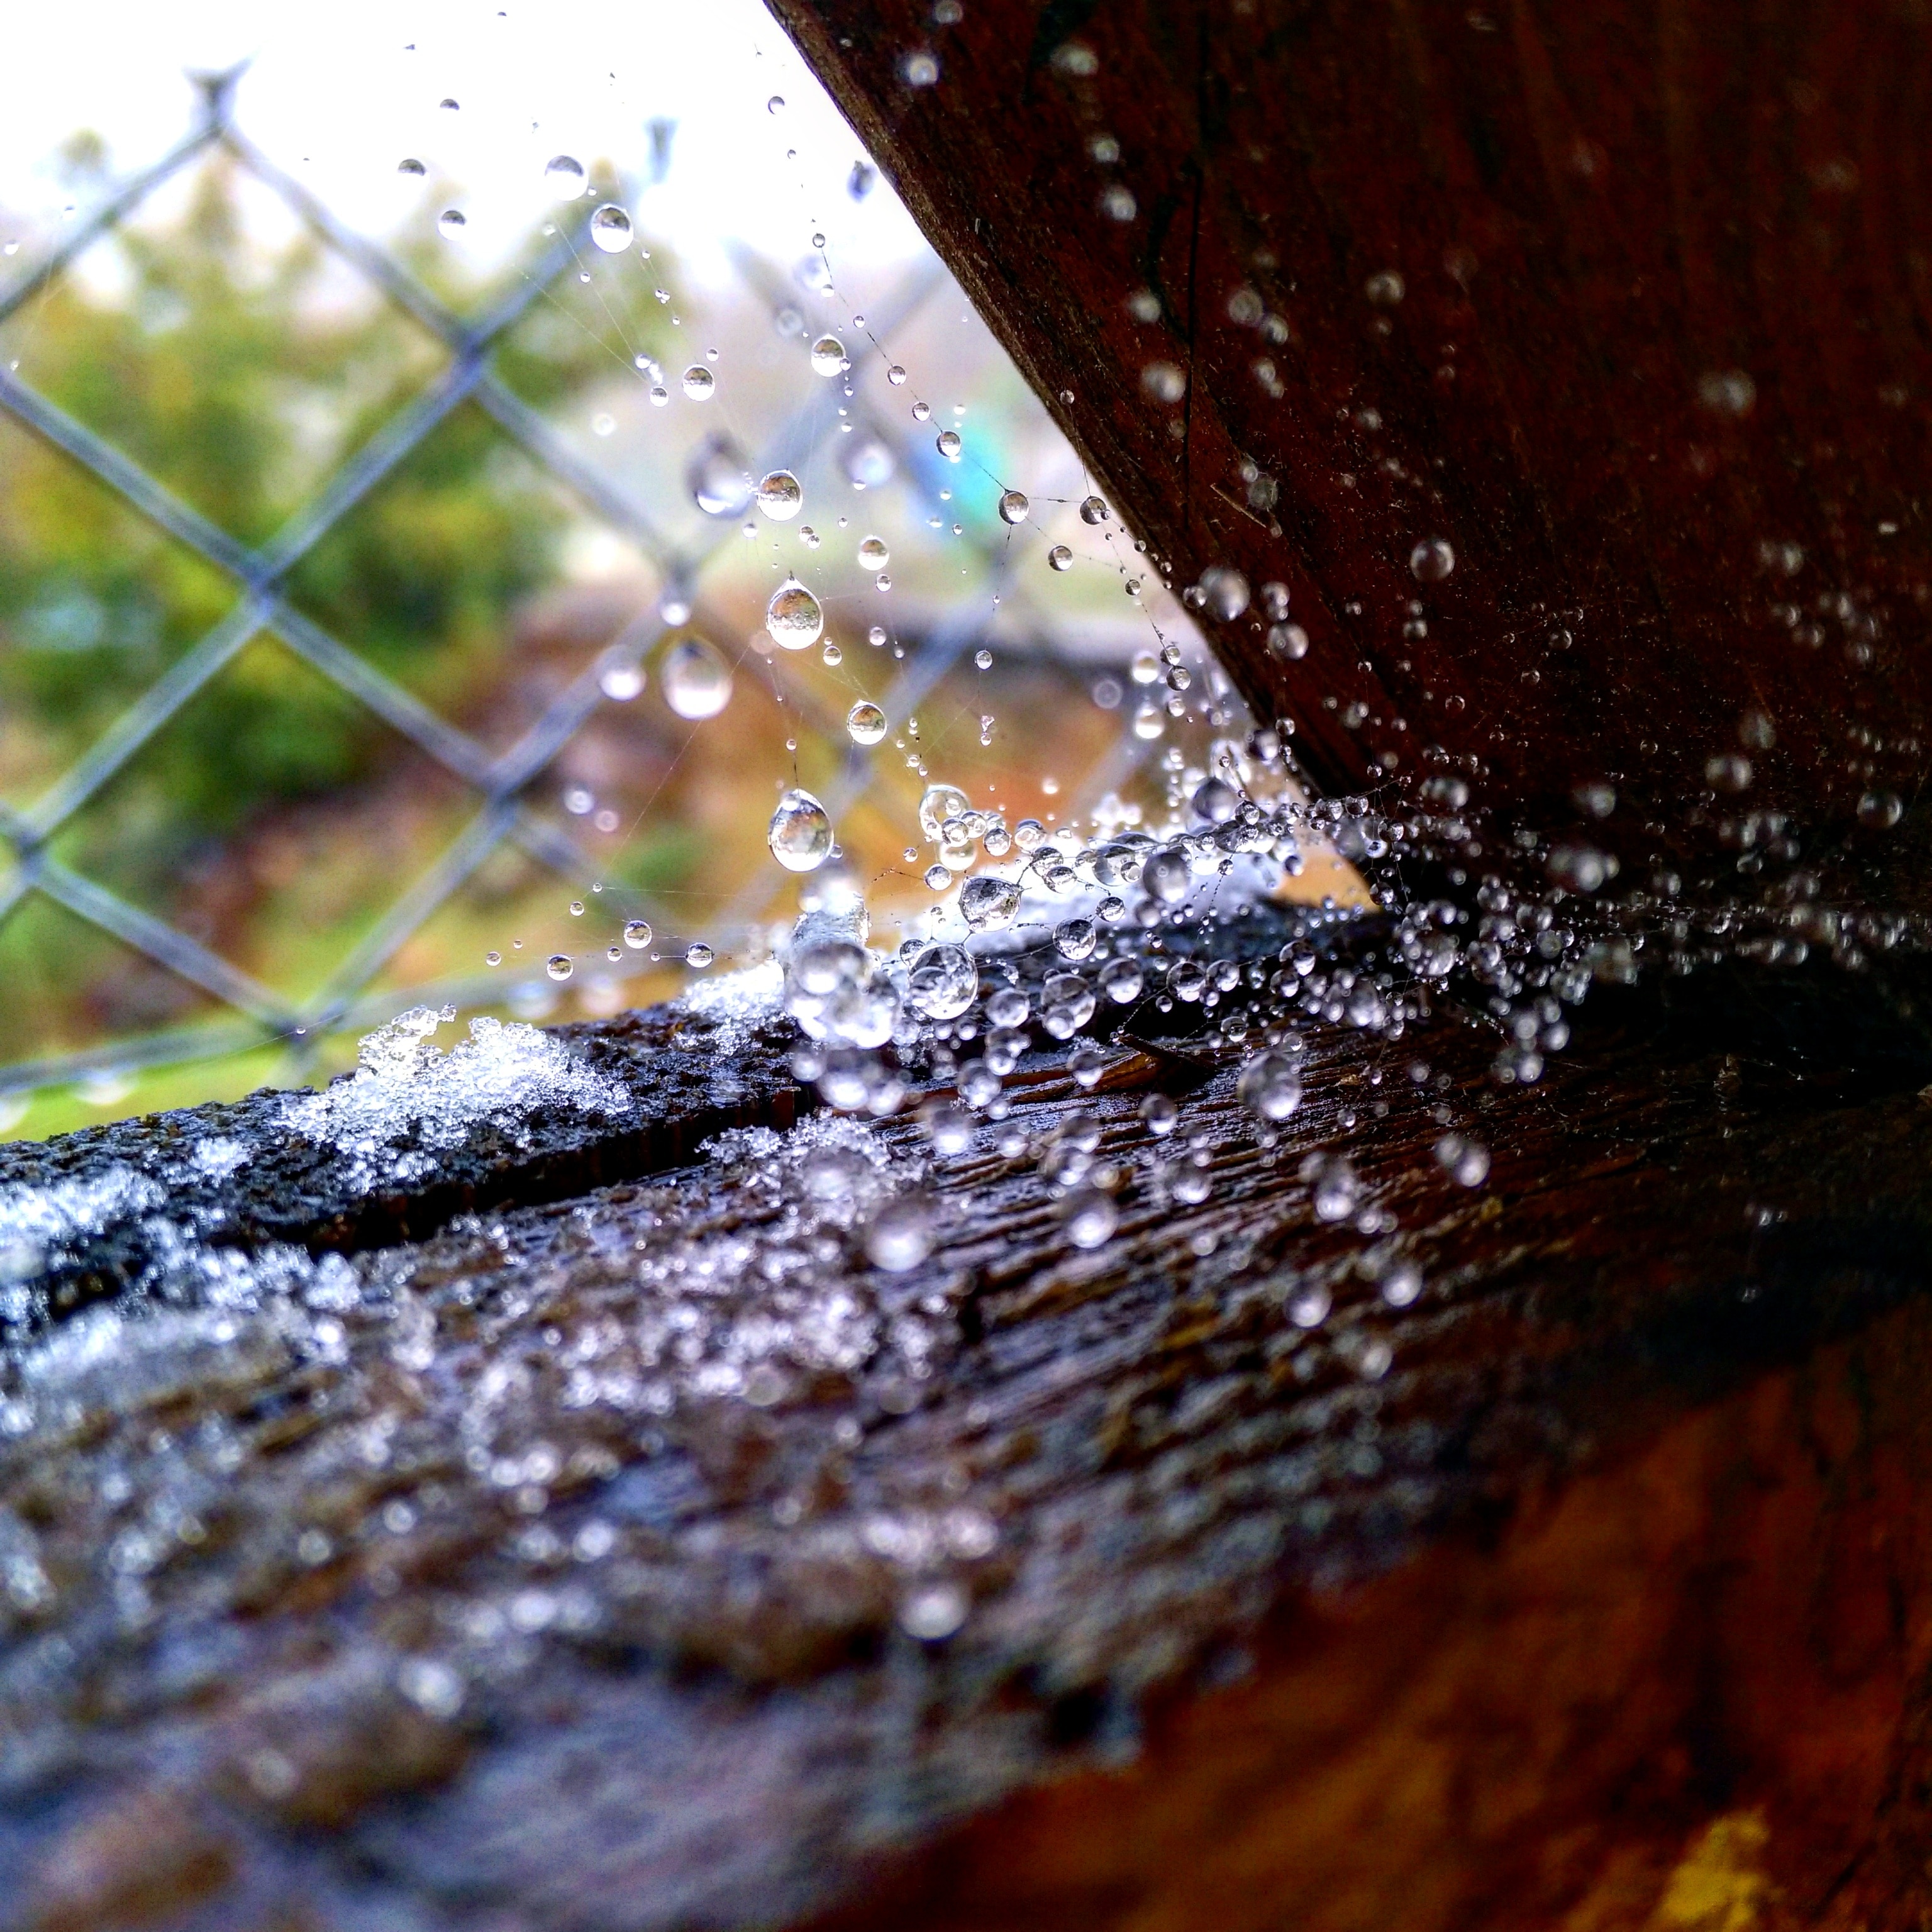 raindrop and gray metal fence